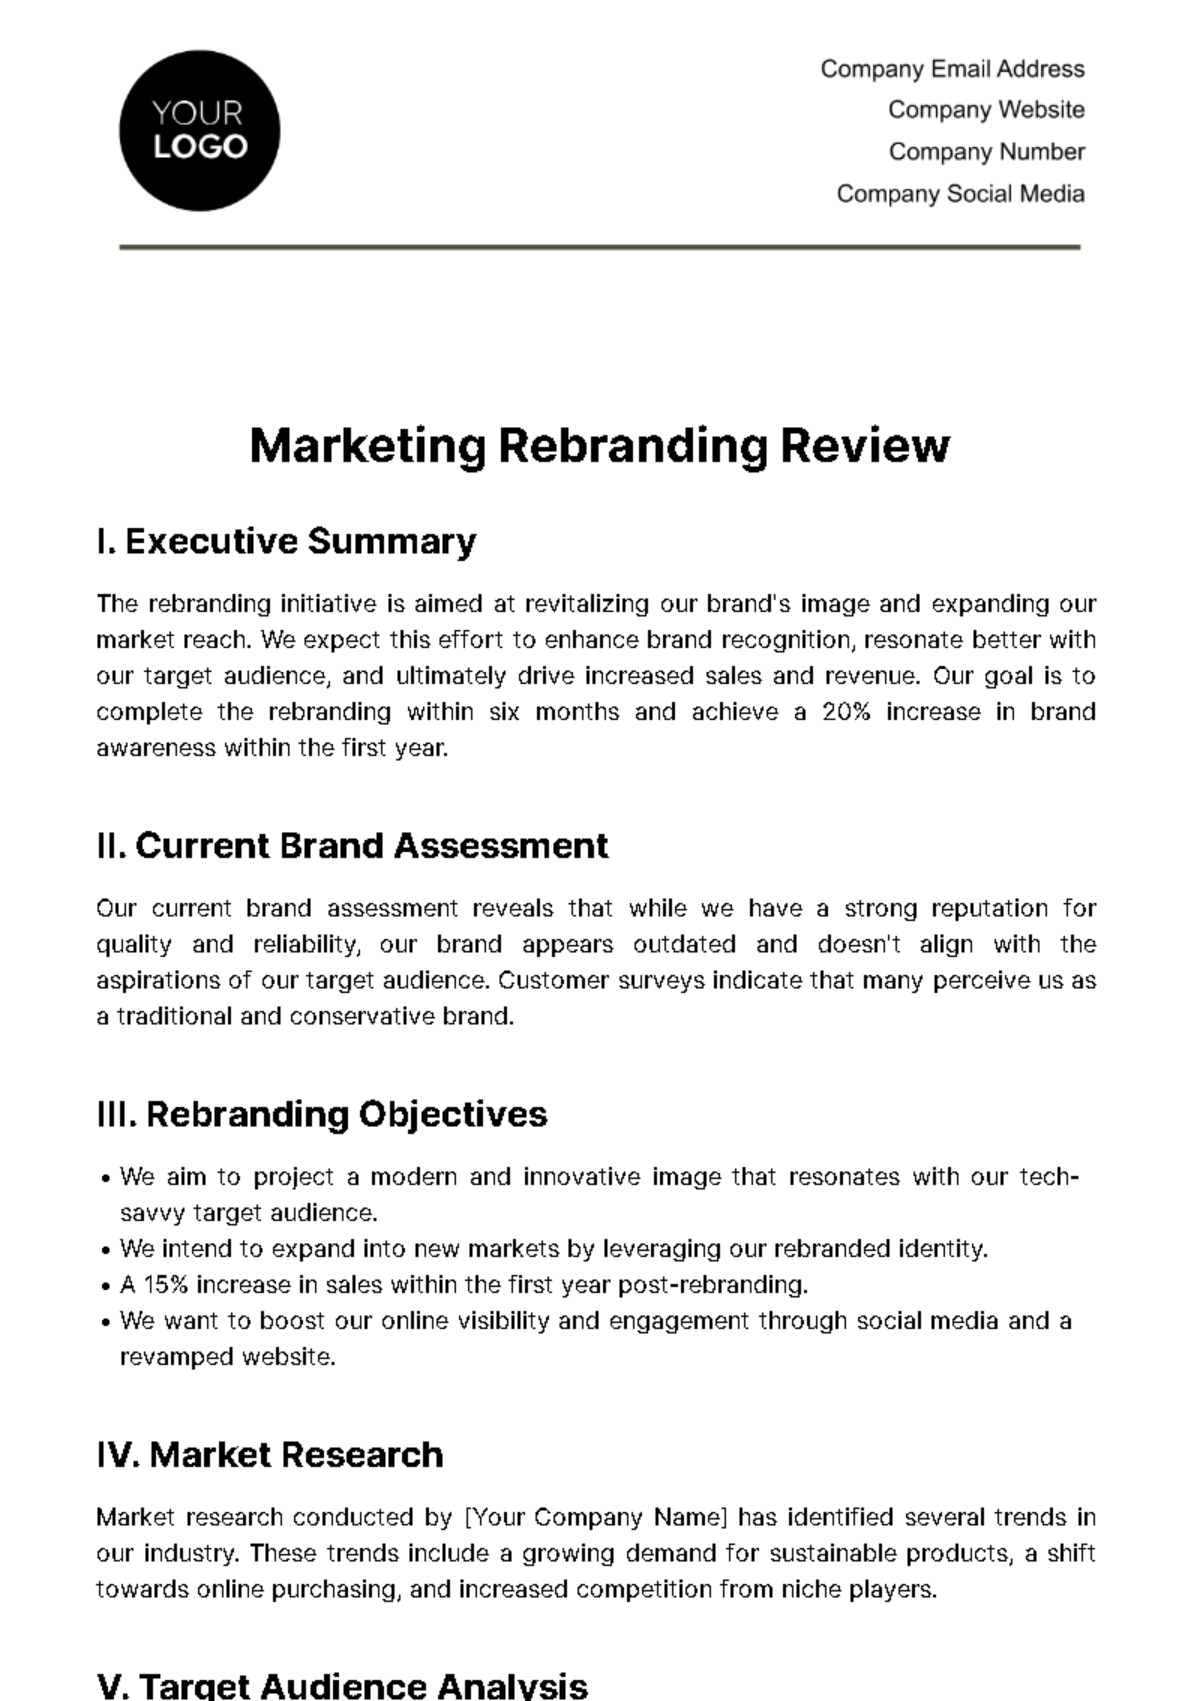 Marketing Rebranding Review Template